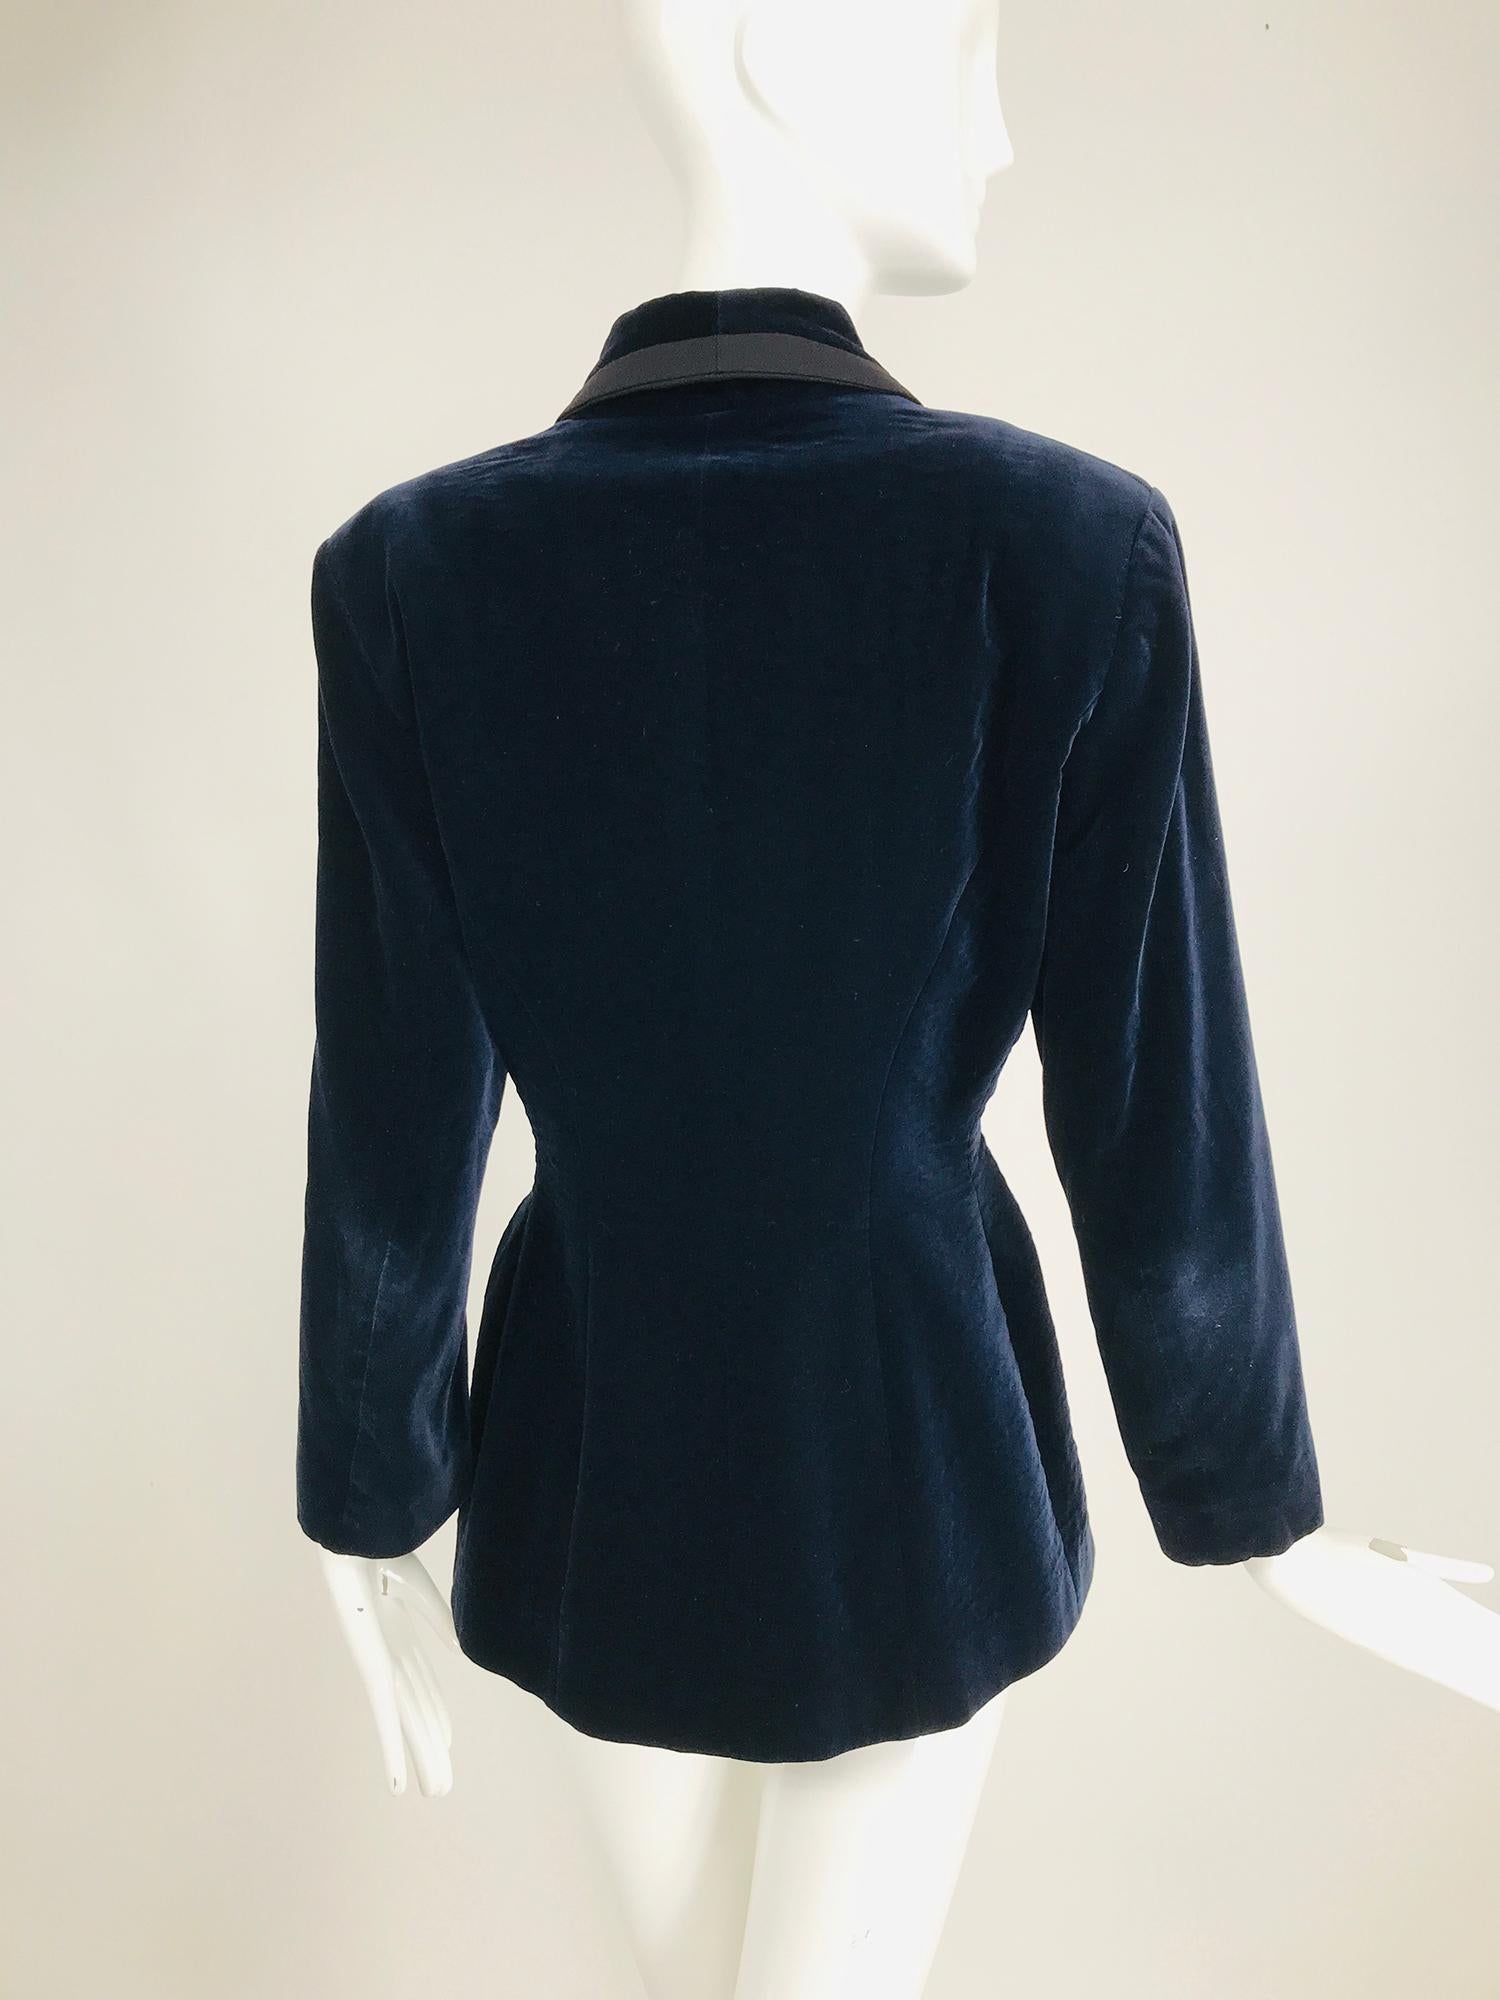 Azzedine Alaïa Blue Velvet Fitted Frock Style Jacket 1980s 1